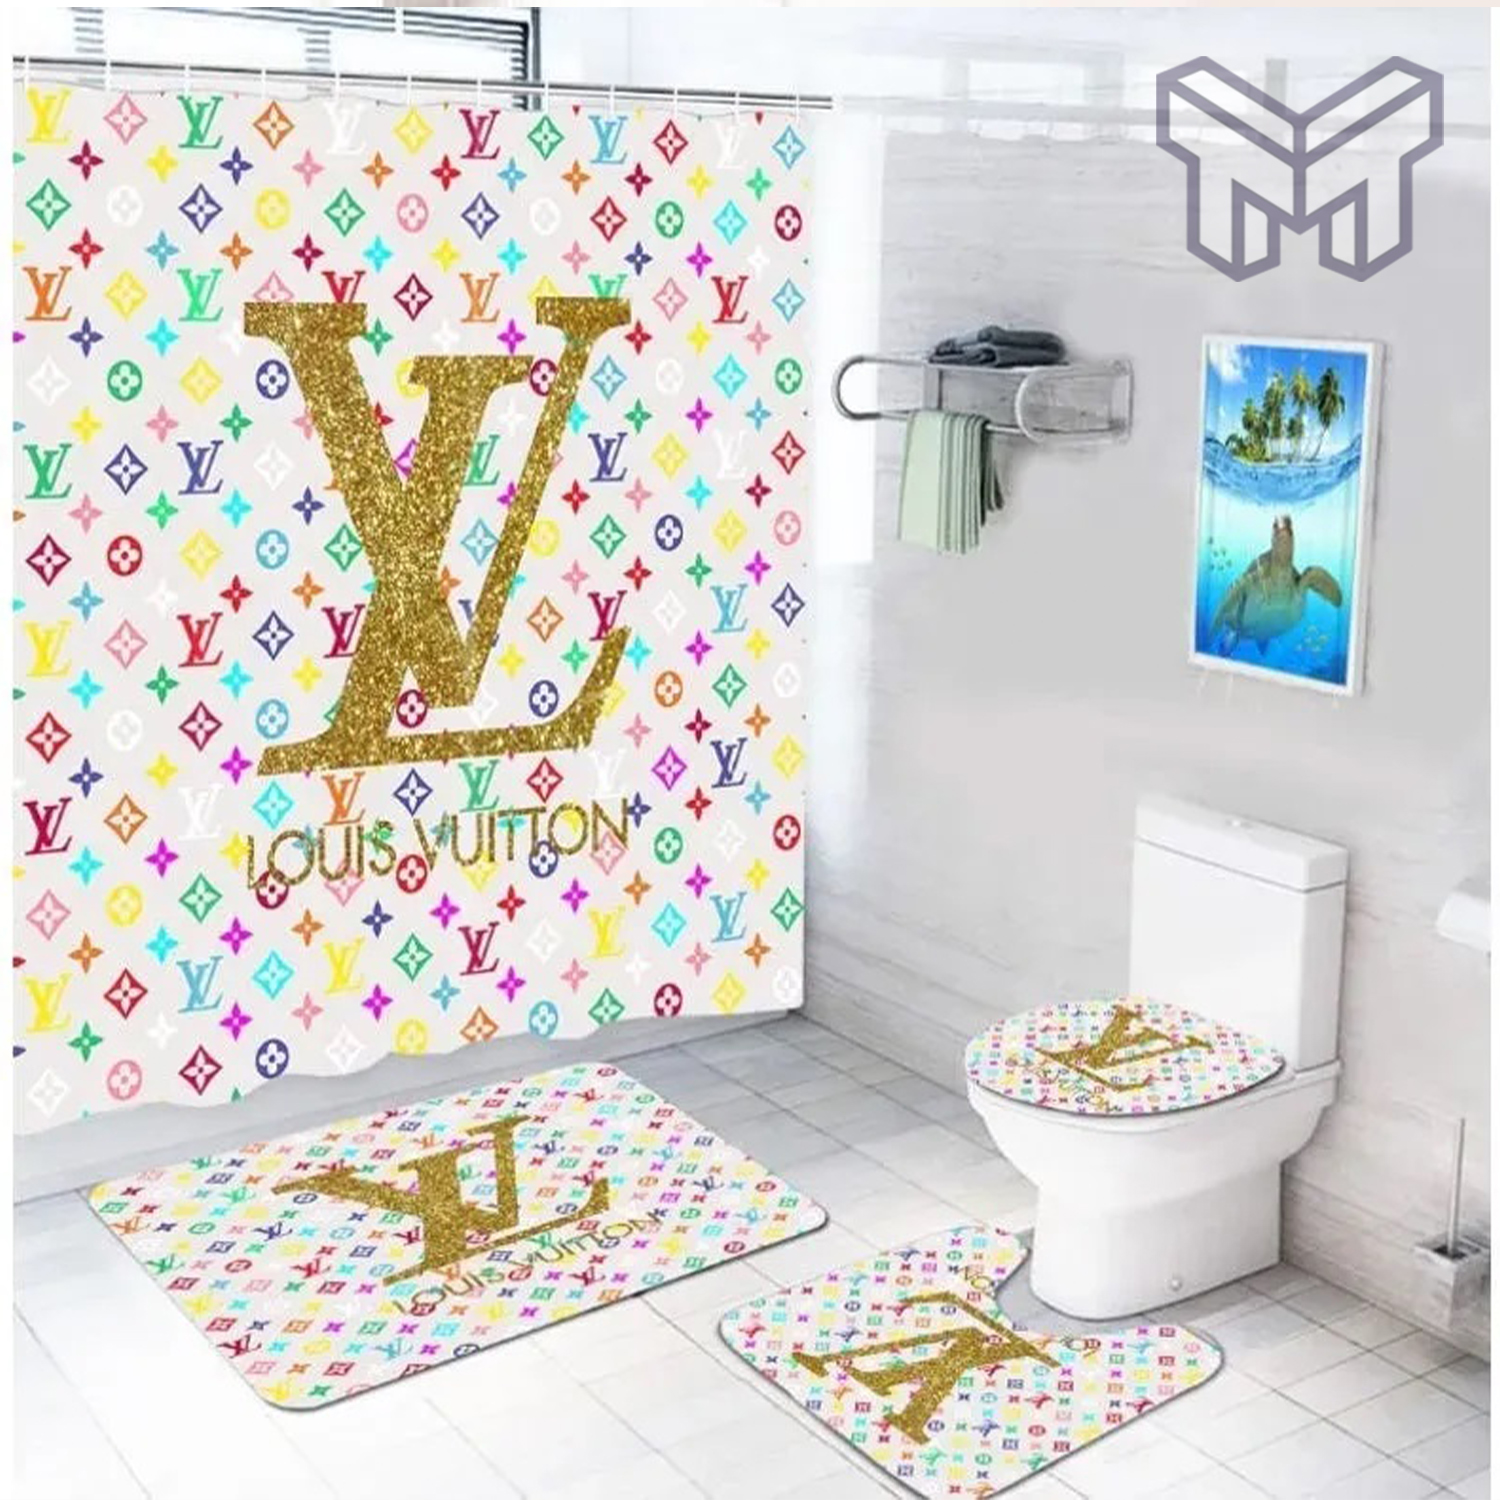 Louis Vuitton Bathroom Set 